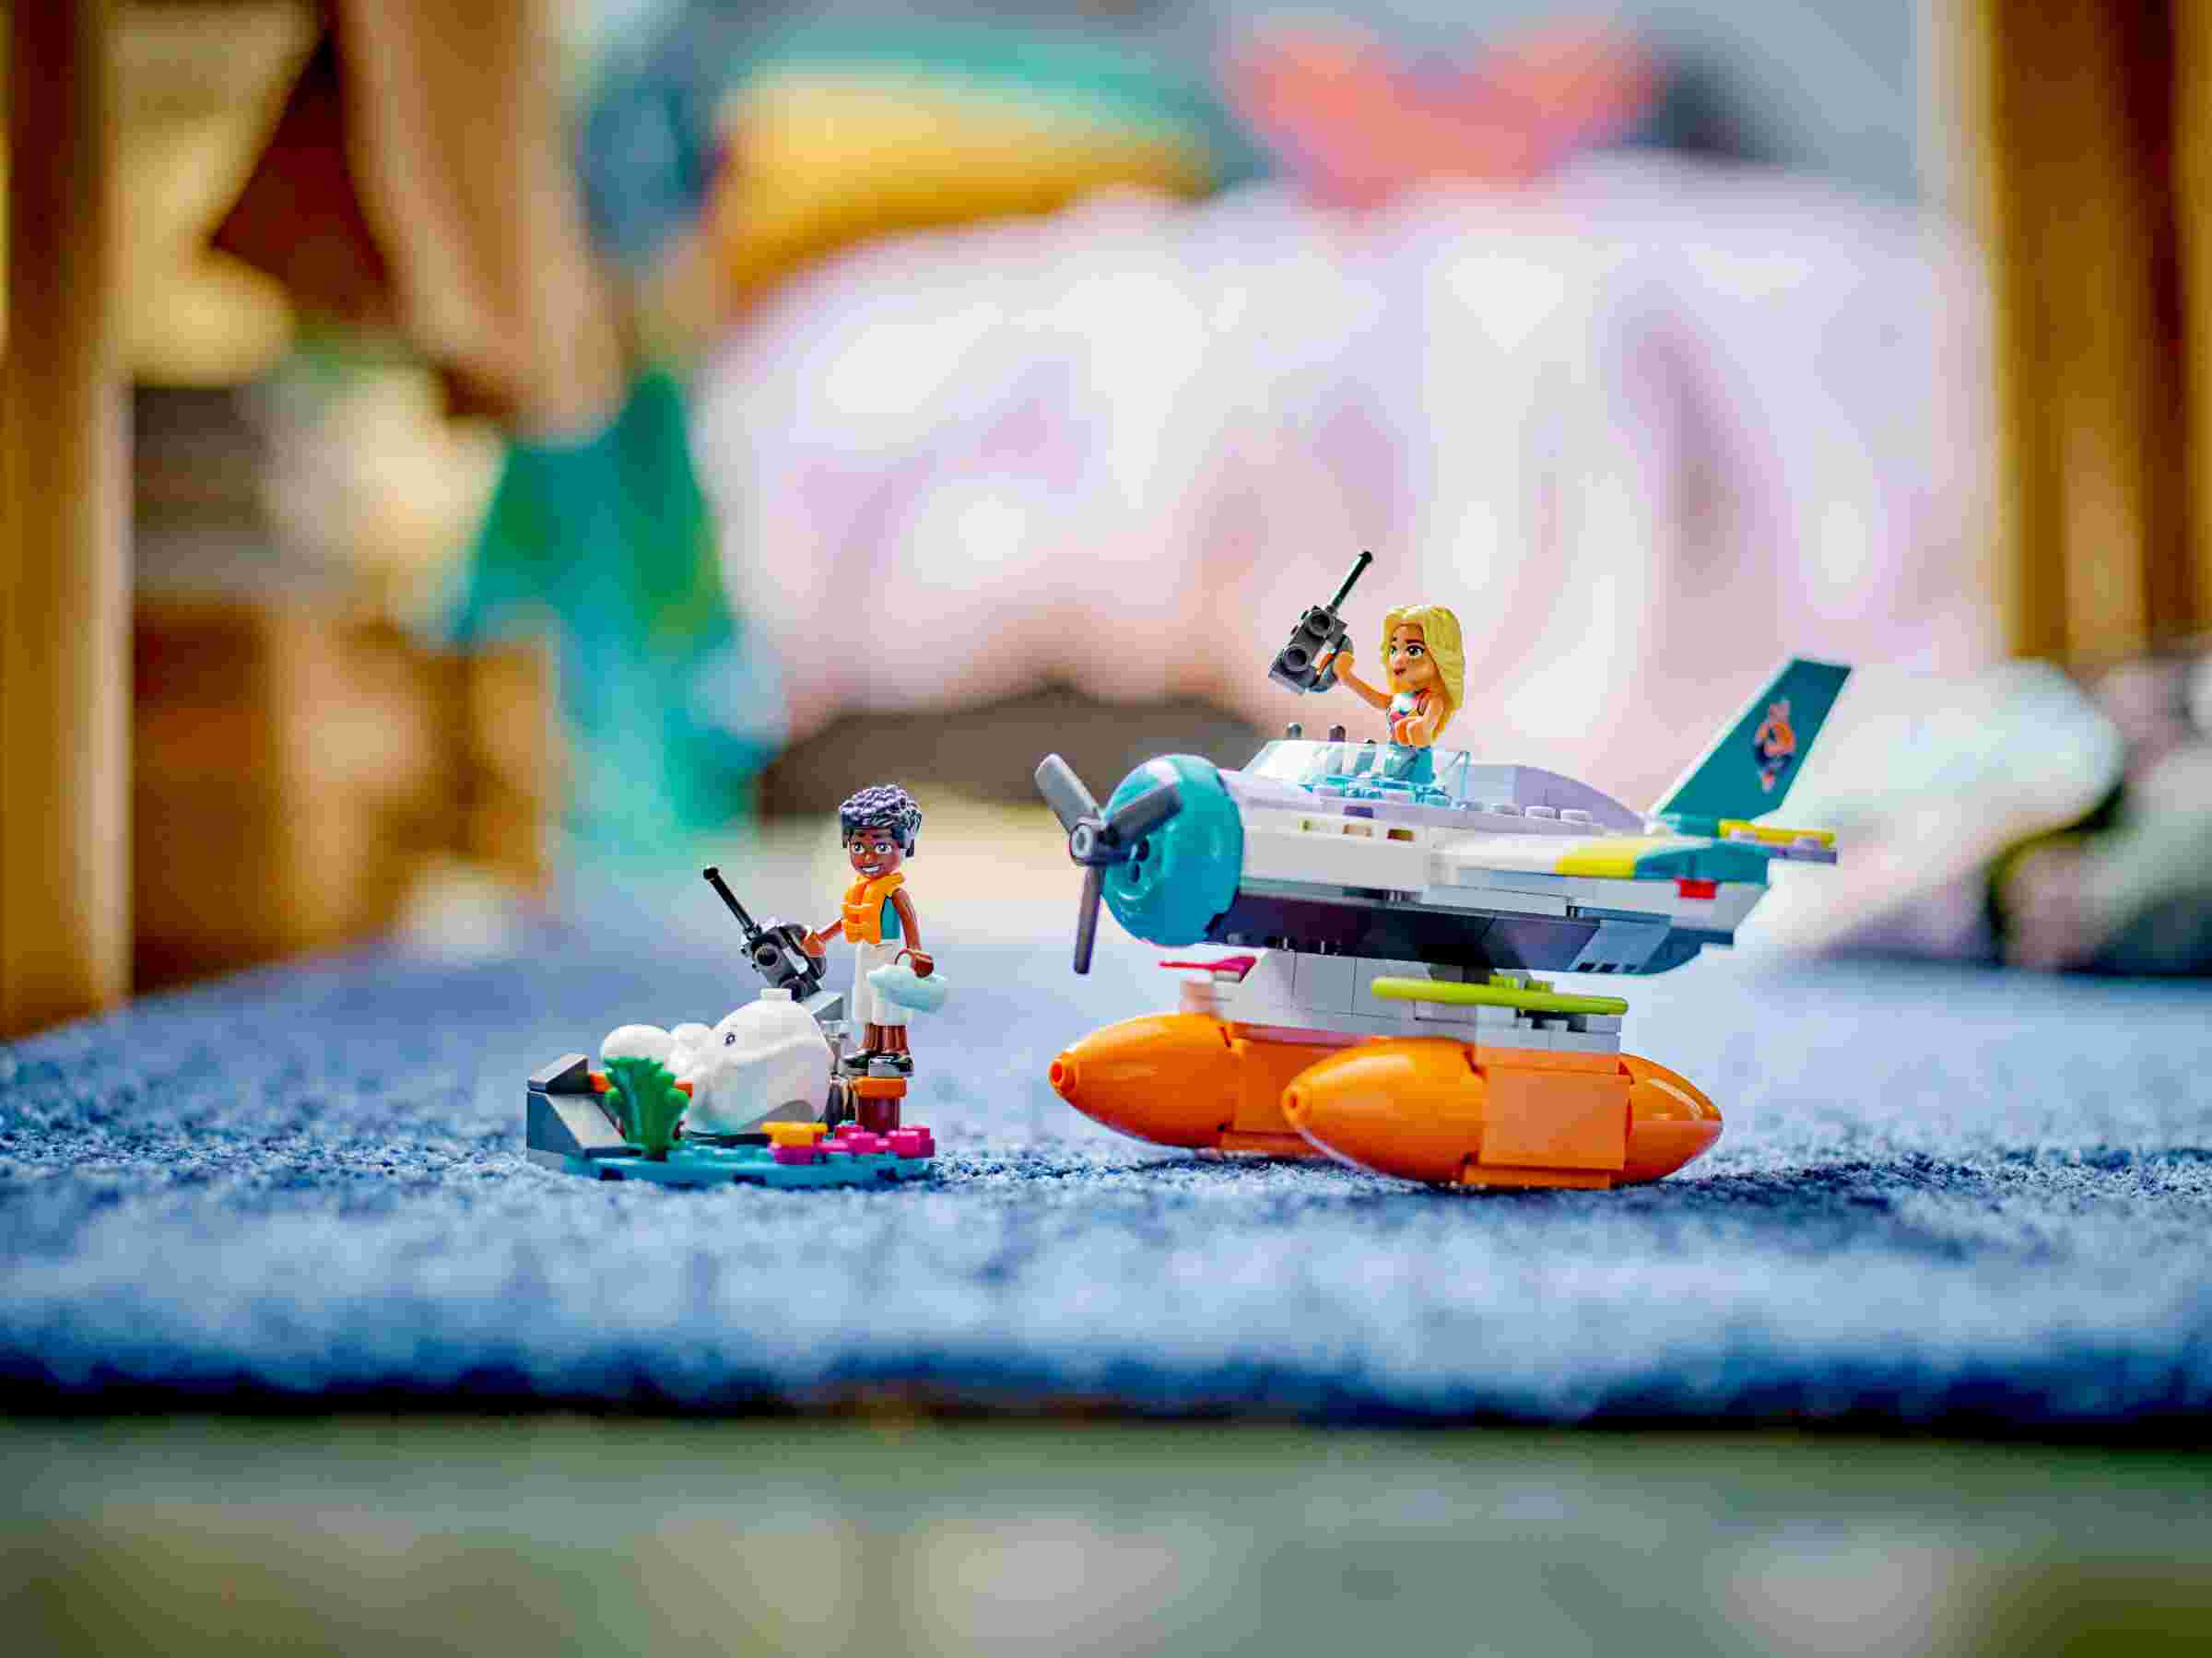 LEGO 41752 Friends Seerettungsflugzeug, 2 Spielfiguren, Wal